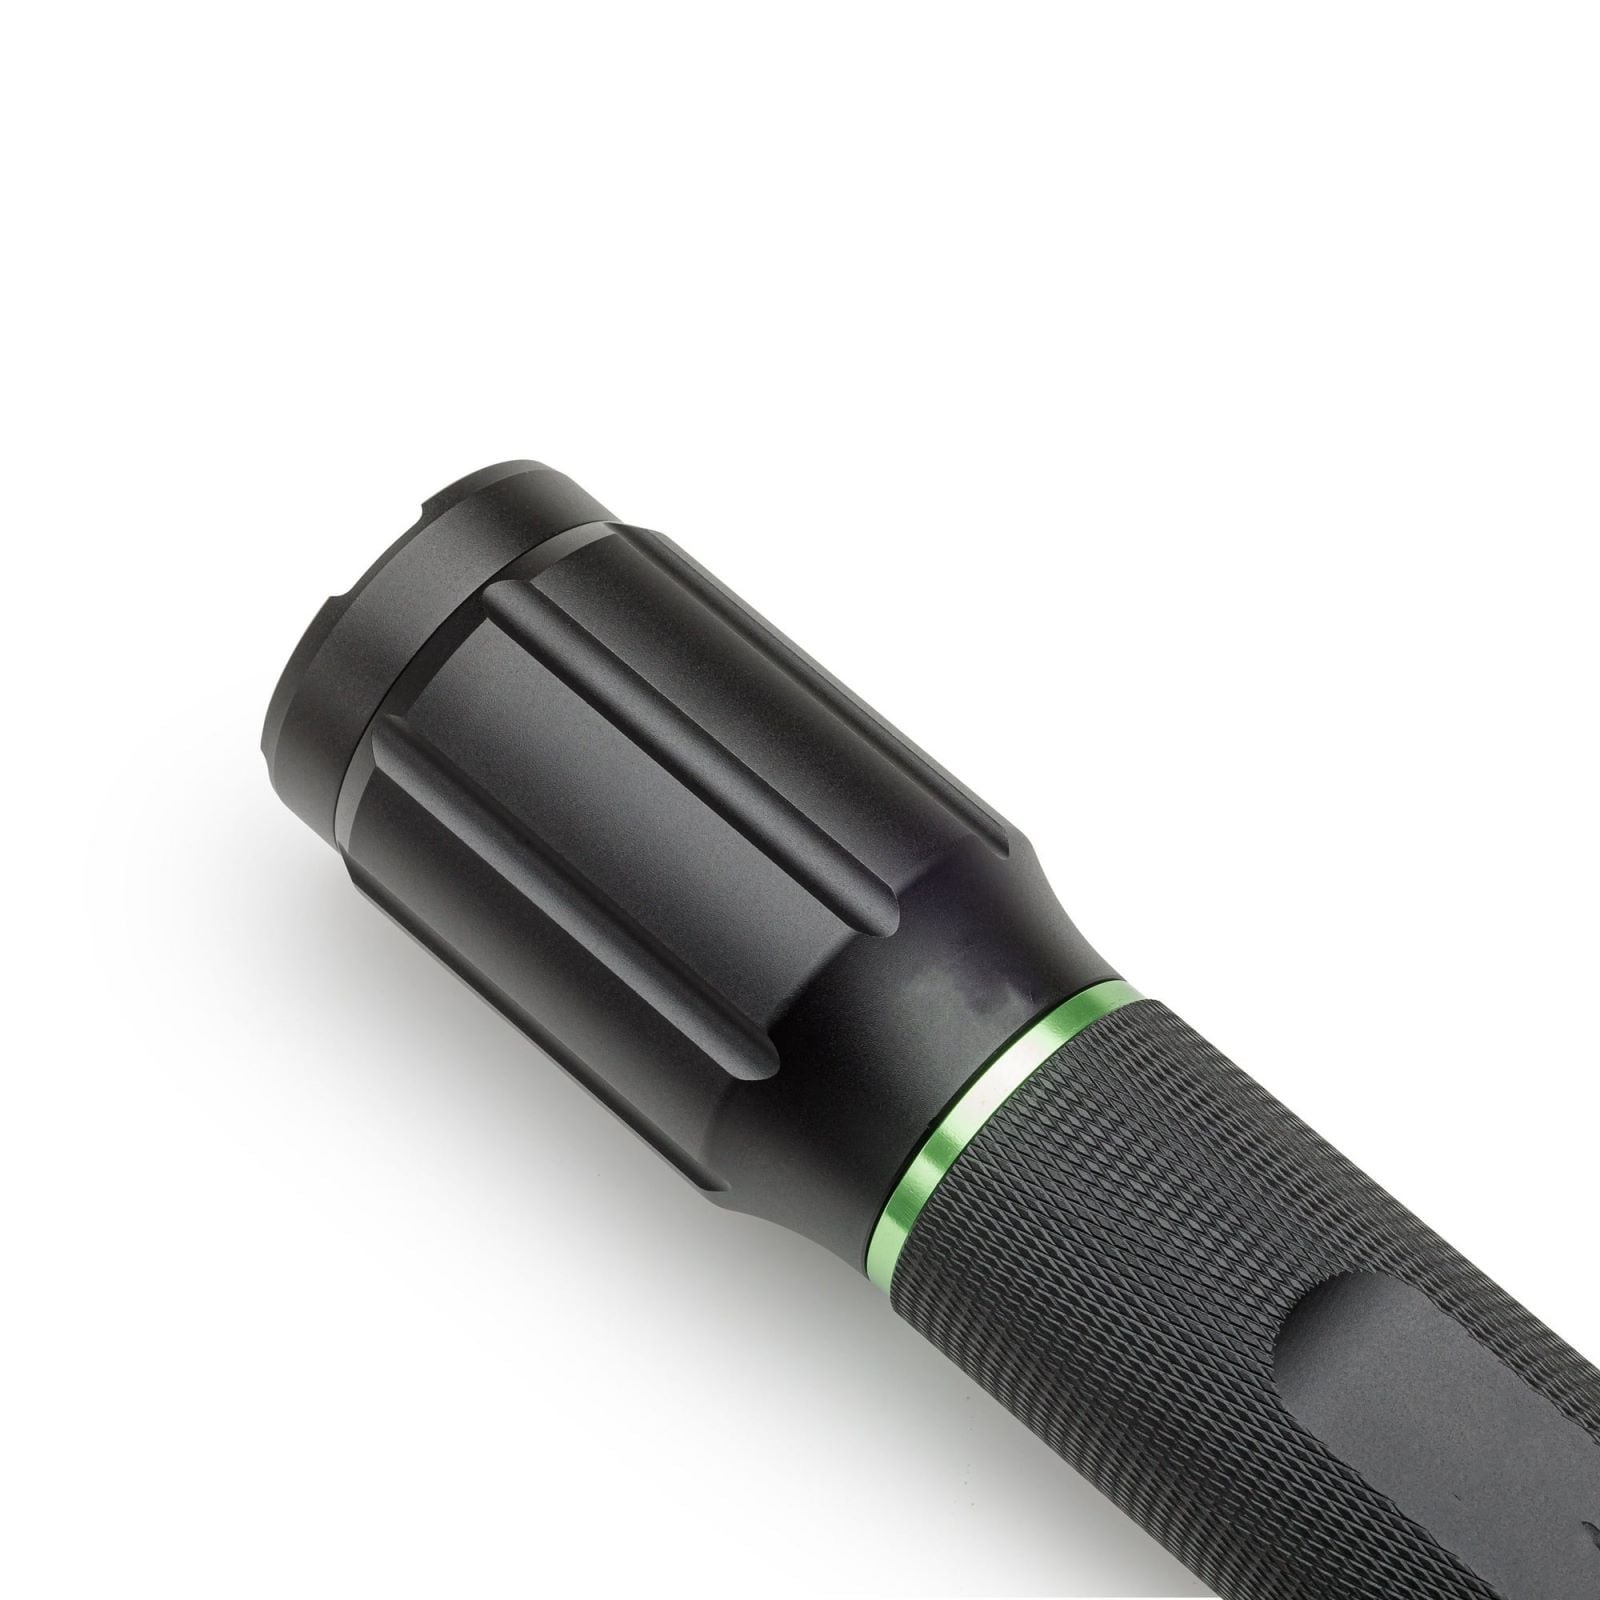 1800 Lumen Rechargeable Waterproof Tactical LED Flashlight